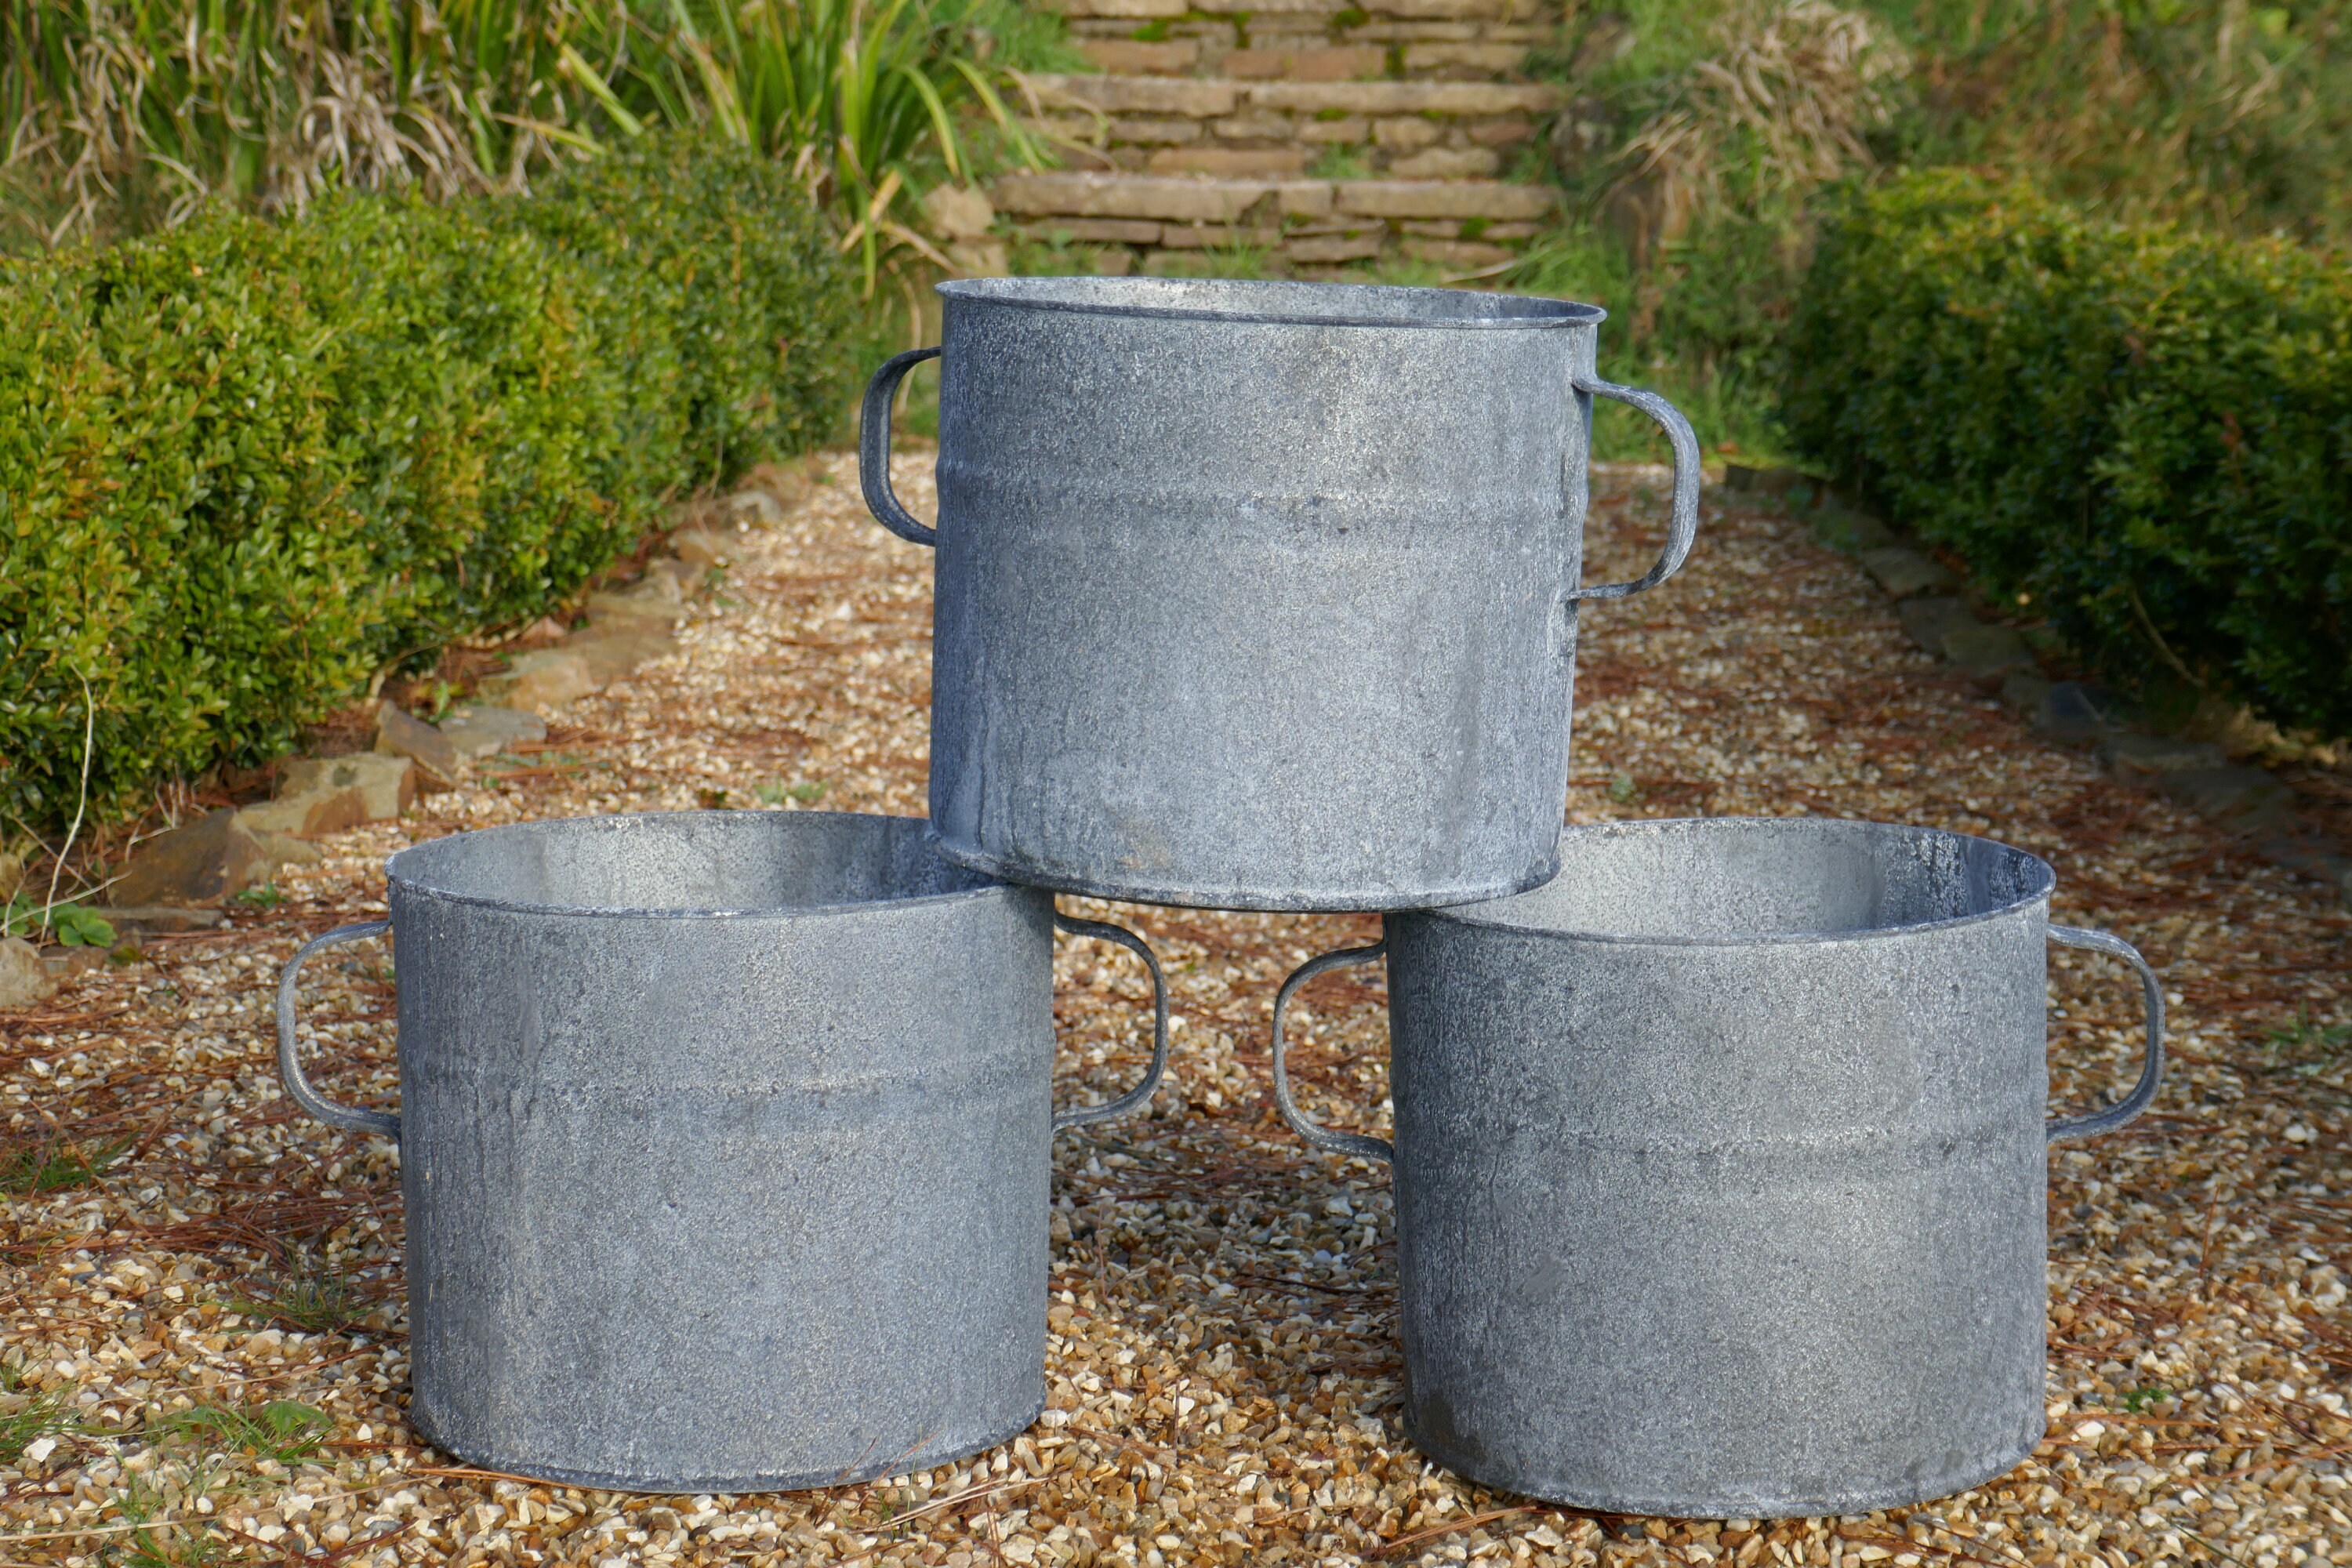 Vintage Rustic Metal Galvanised Flower Pots Garden Yard Planters Buckets #2 